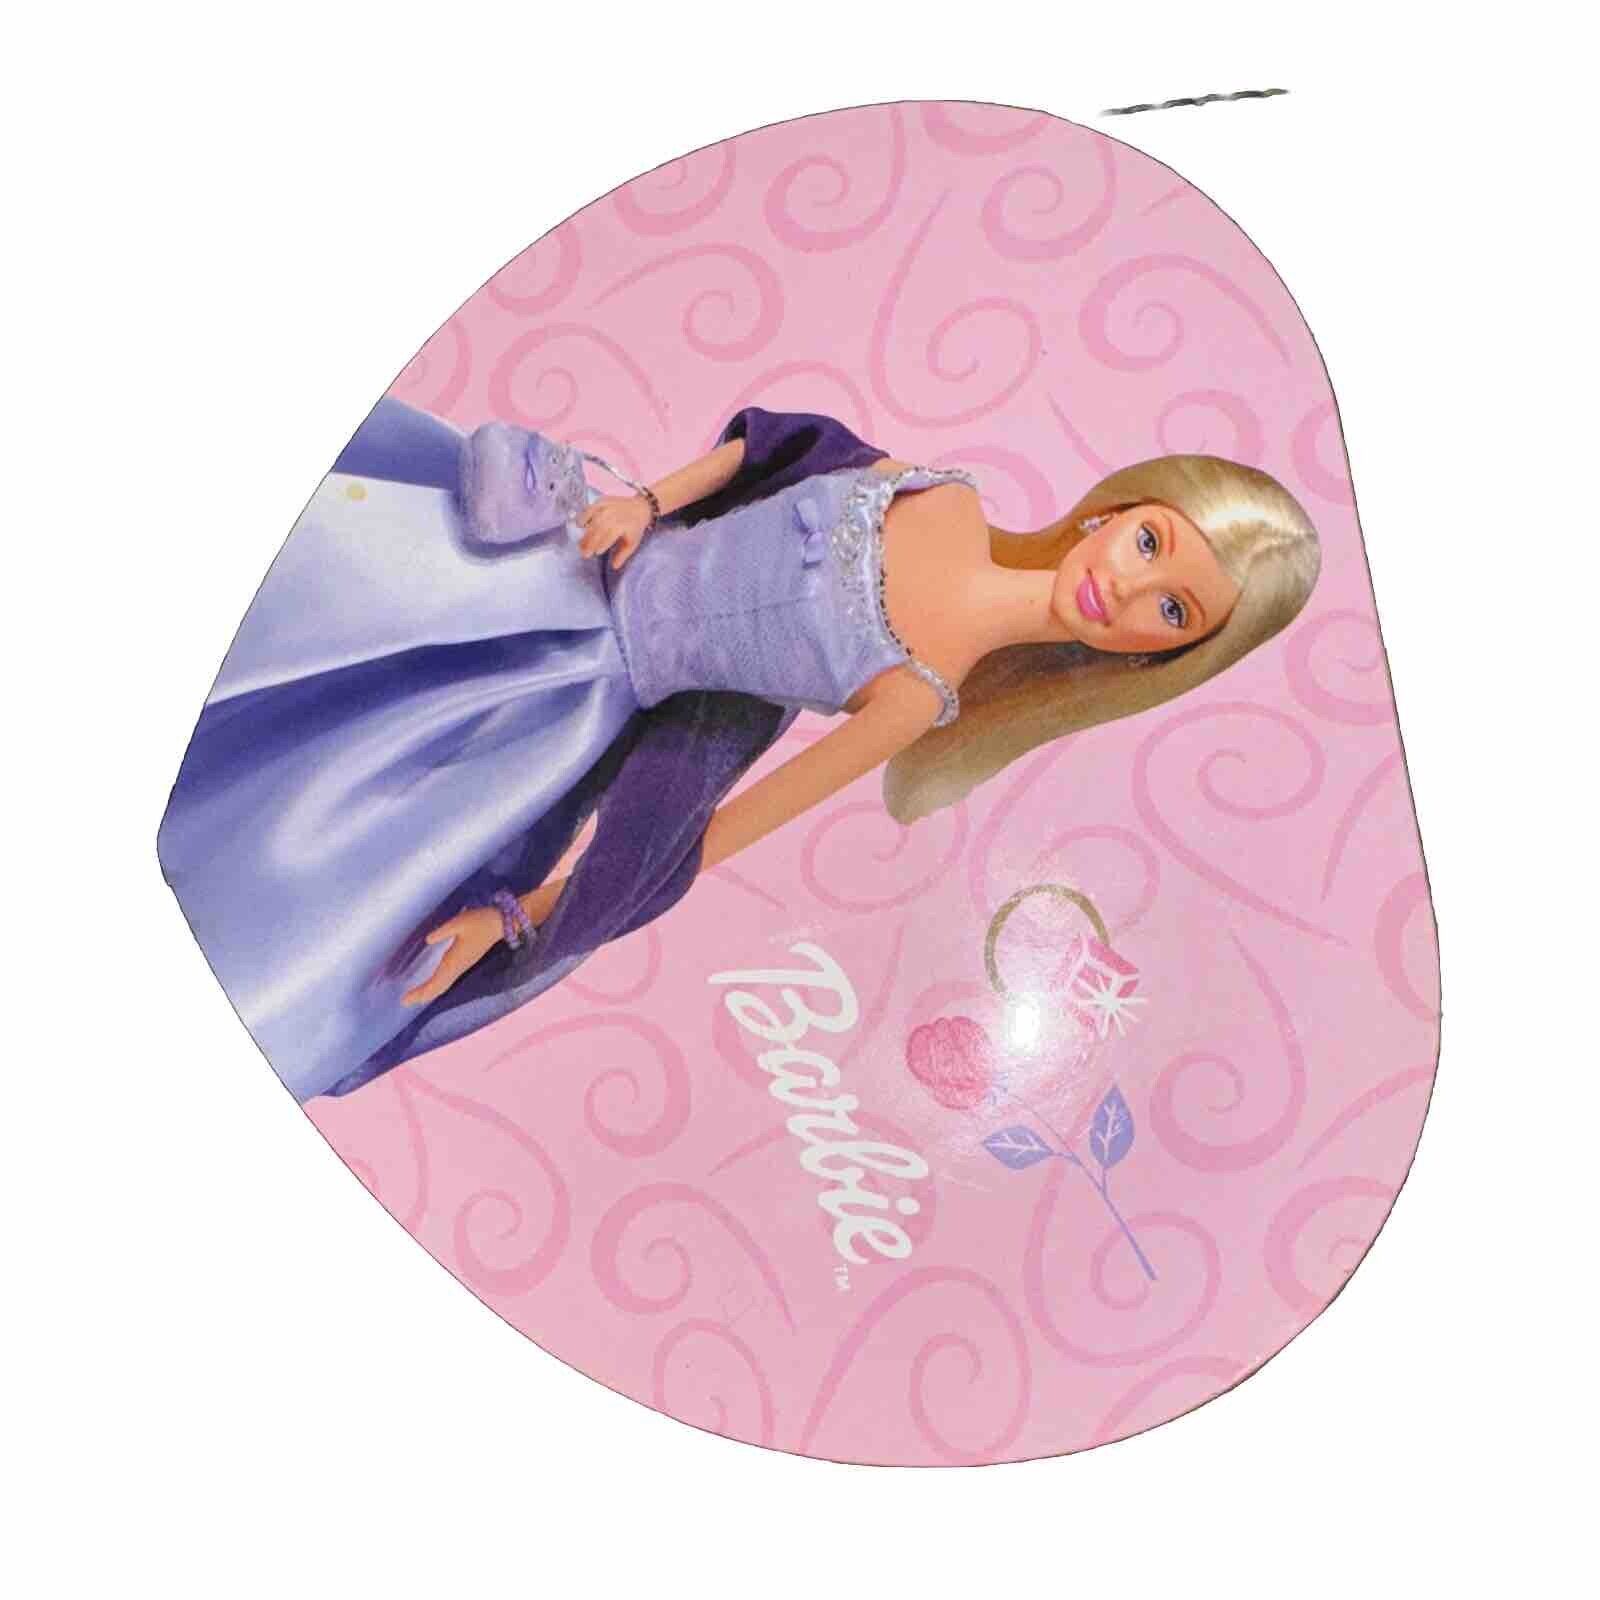 Barbie 2002 Musical Heart shape Jewelry Box “A Blue Danube Waltz”